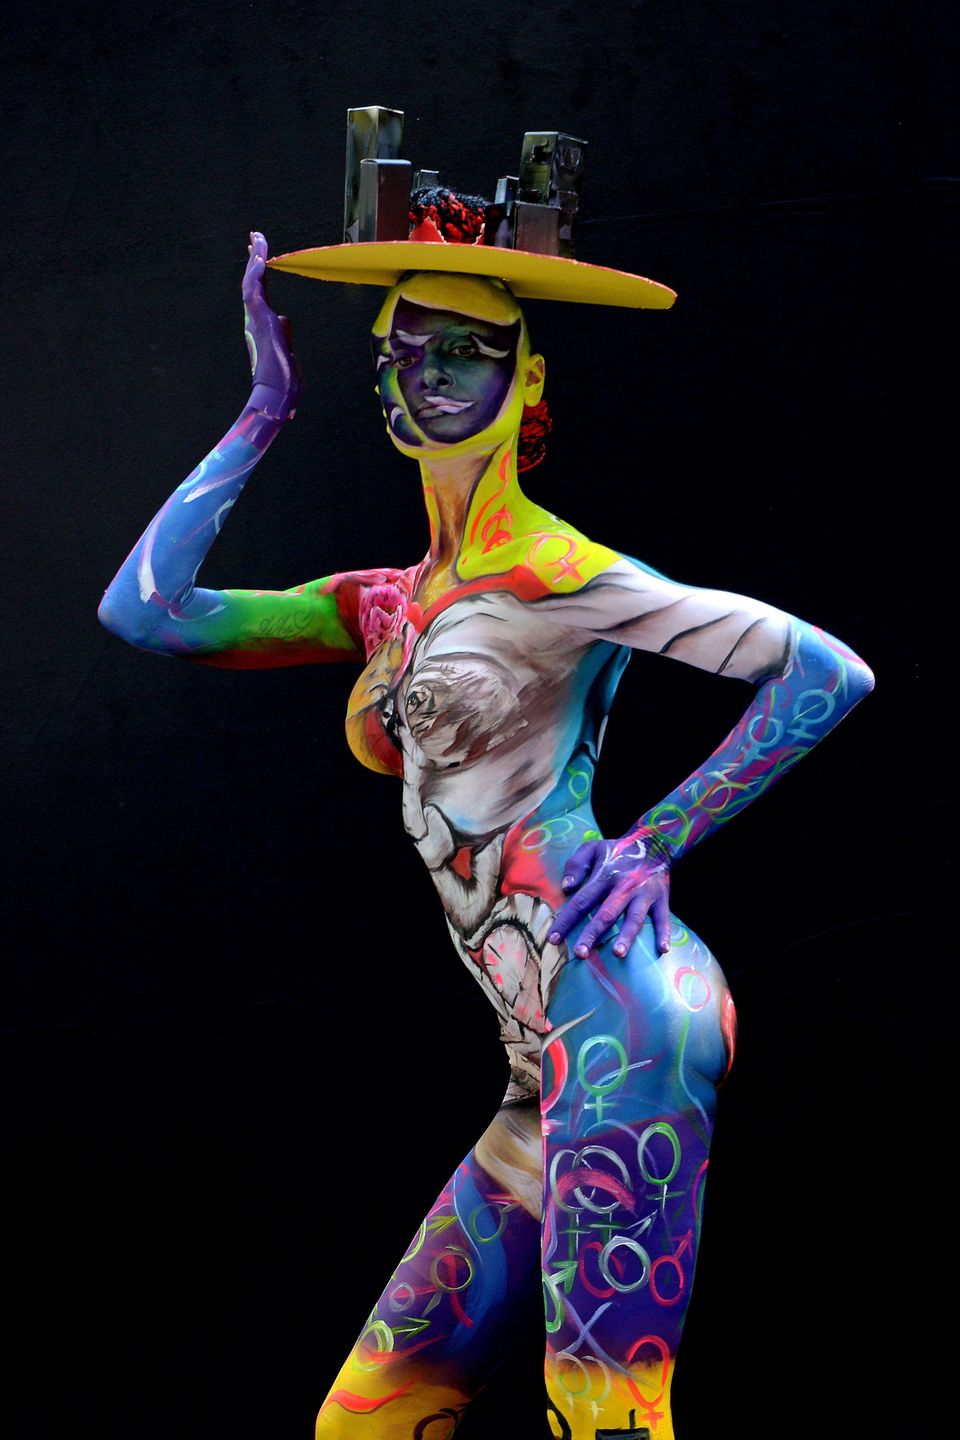 Body painting festival.